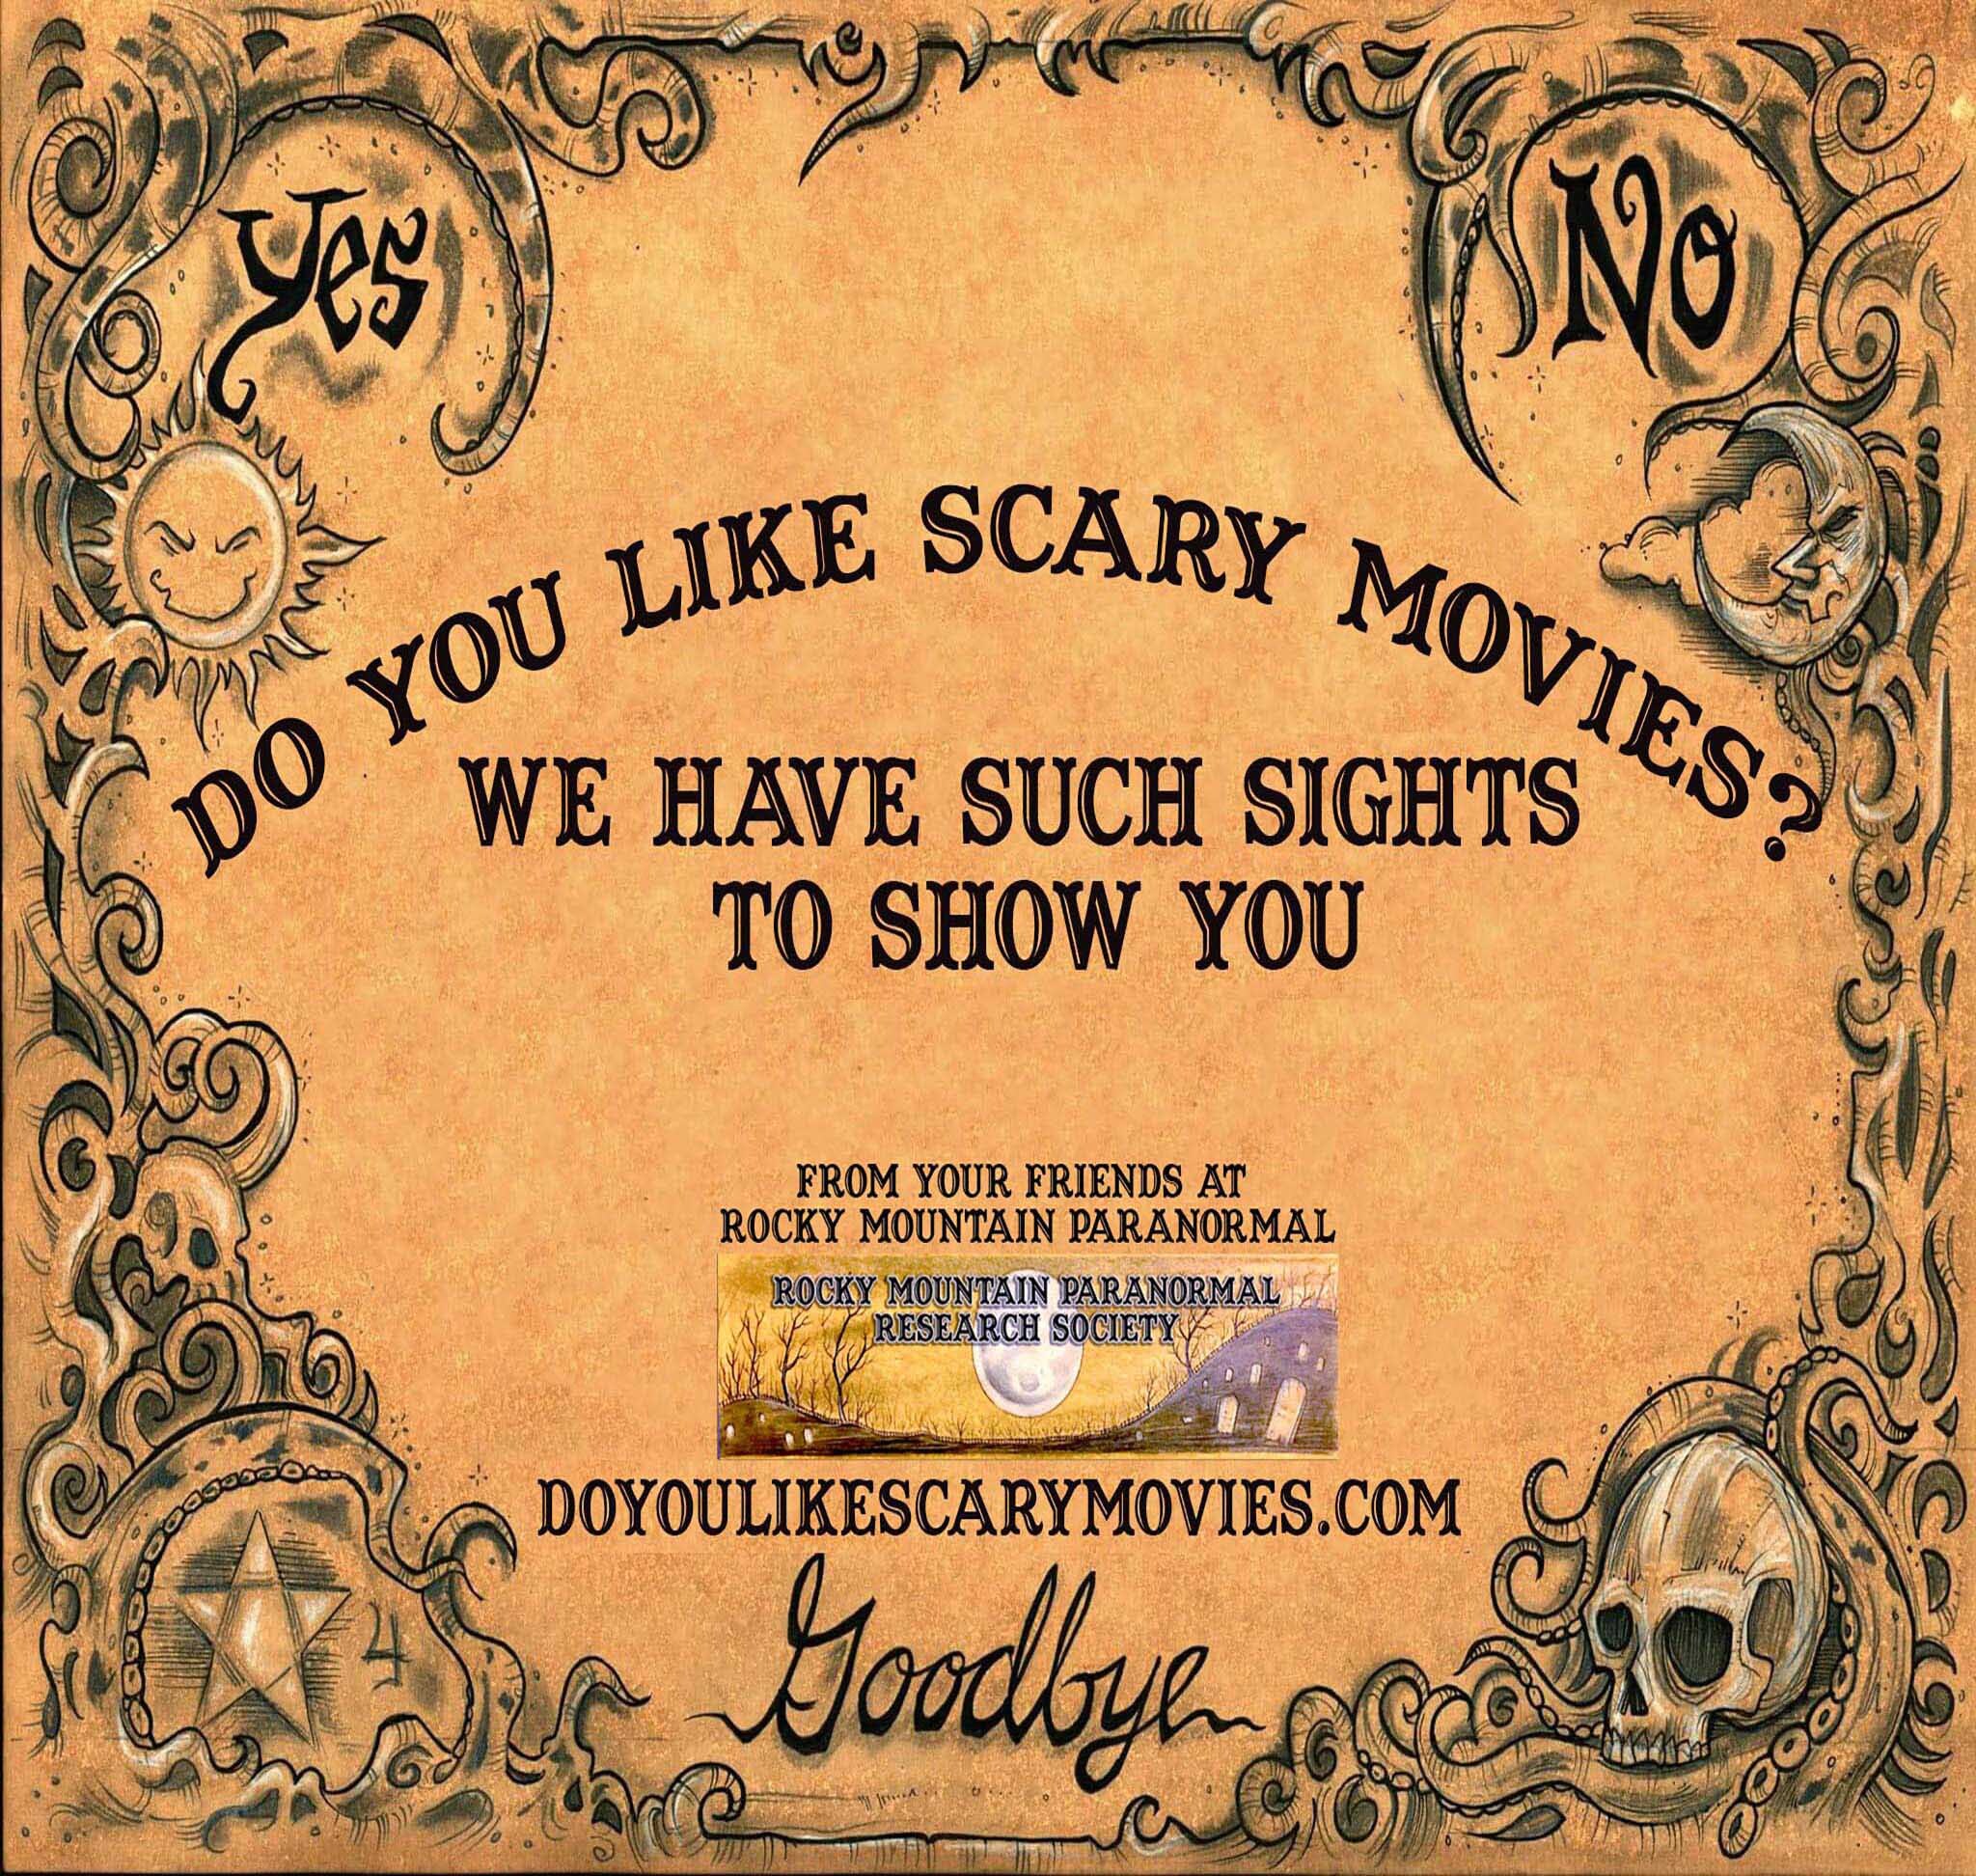 Do You Like Scary Movies? header image 1